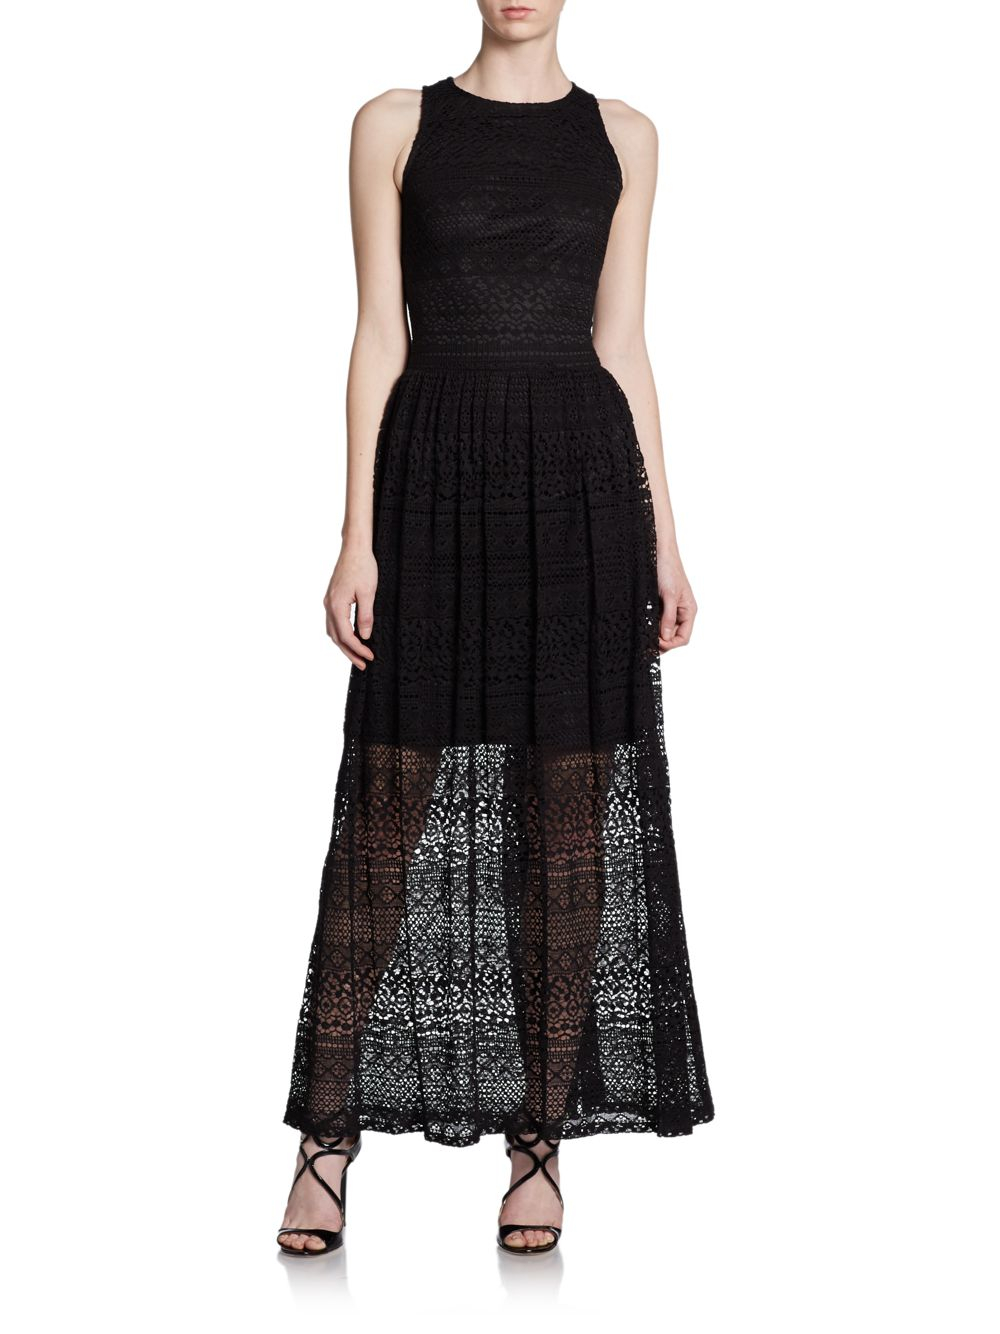 Saks Fifth Avenue Black Label Lace Maxi Dress in Black | Lyst